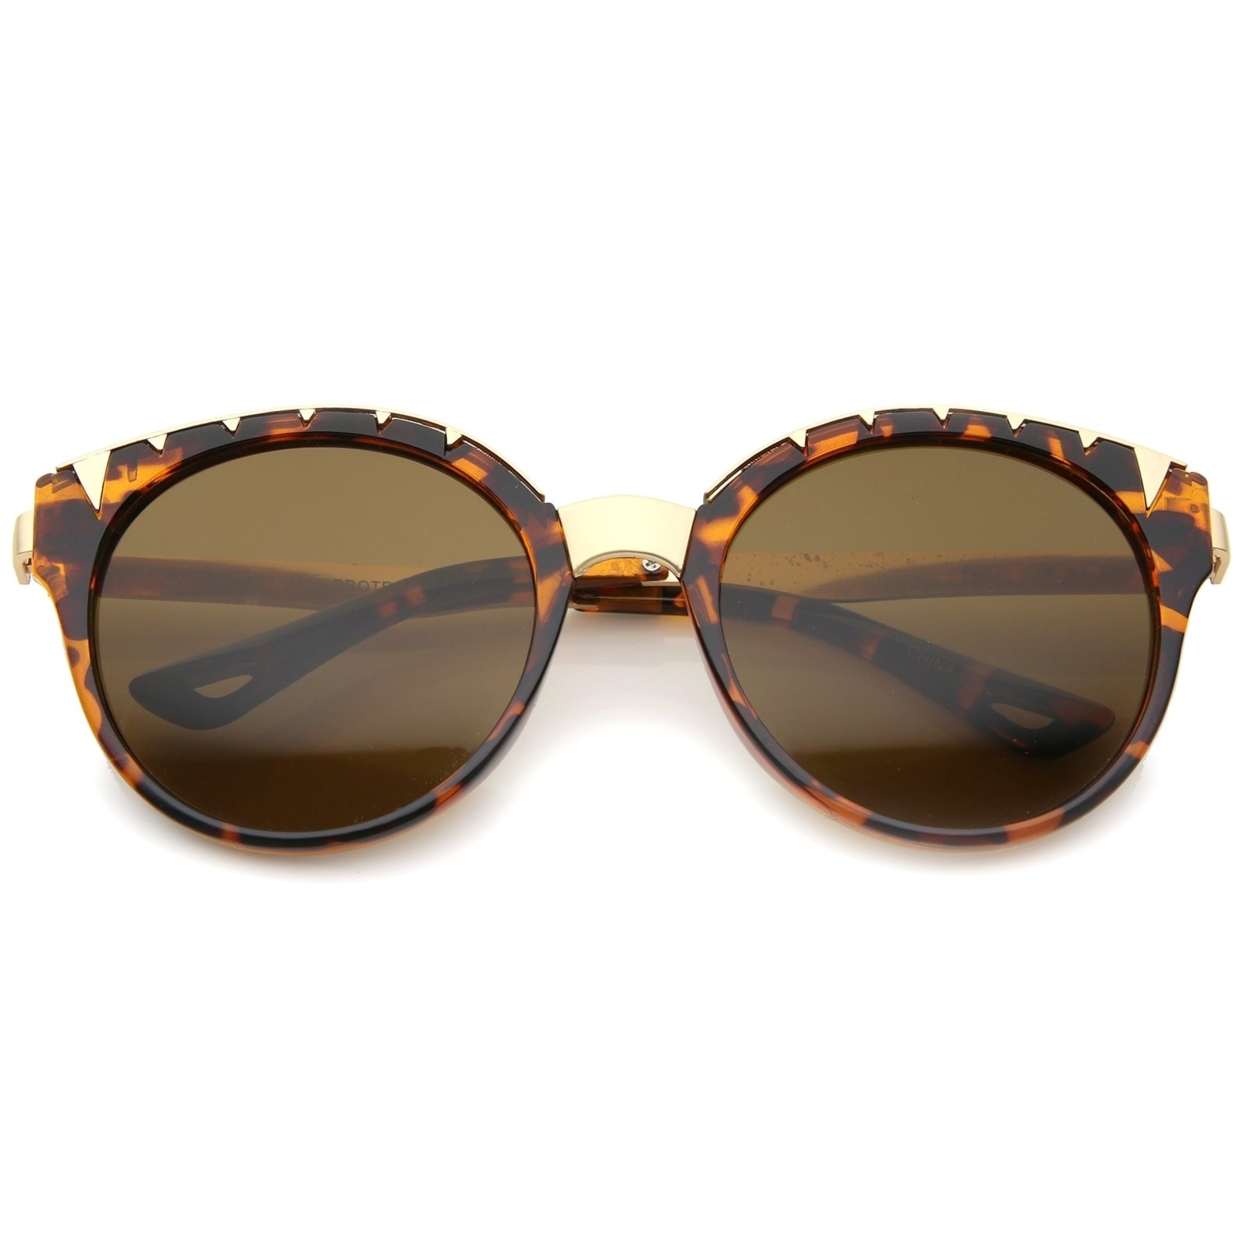 Women's Oversize Triangle Detail Round Cat Eye Sunglasses 55mm - Tortoise-Gold / Brown